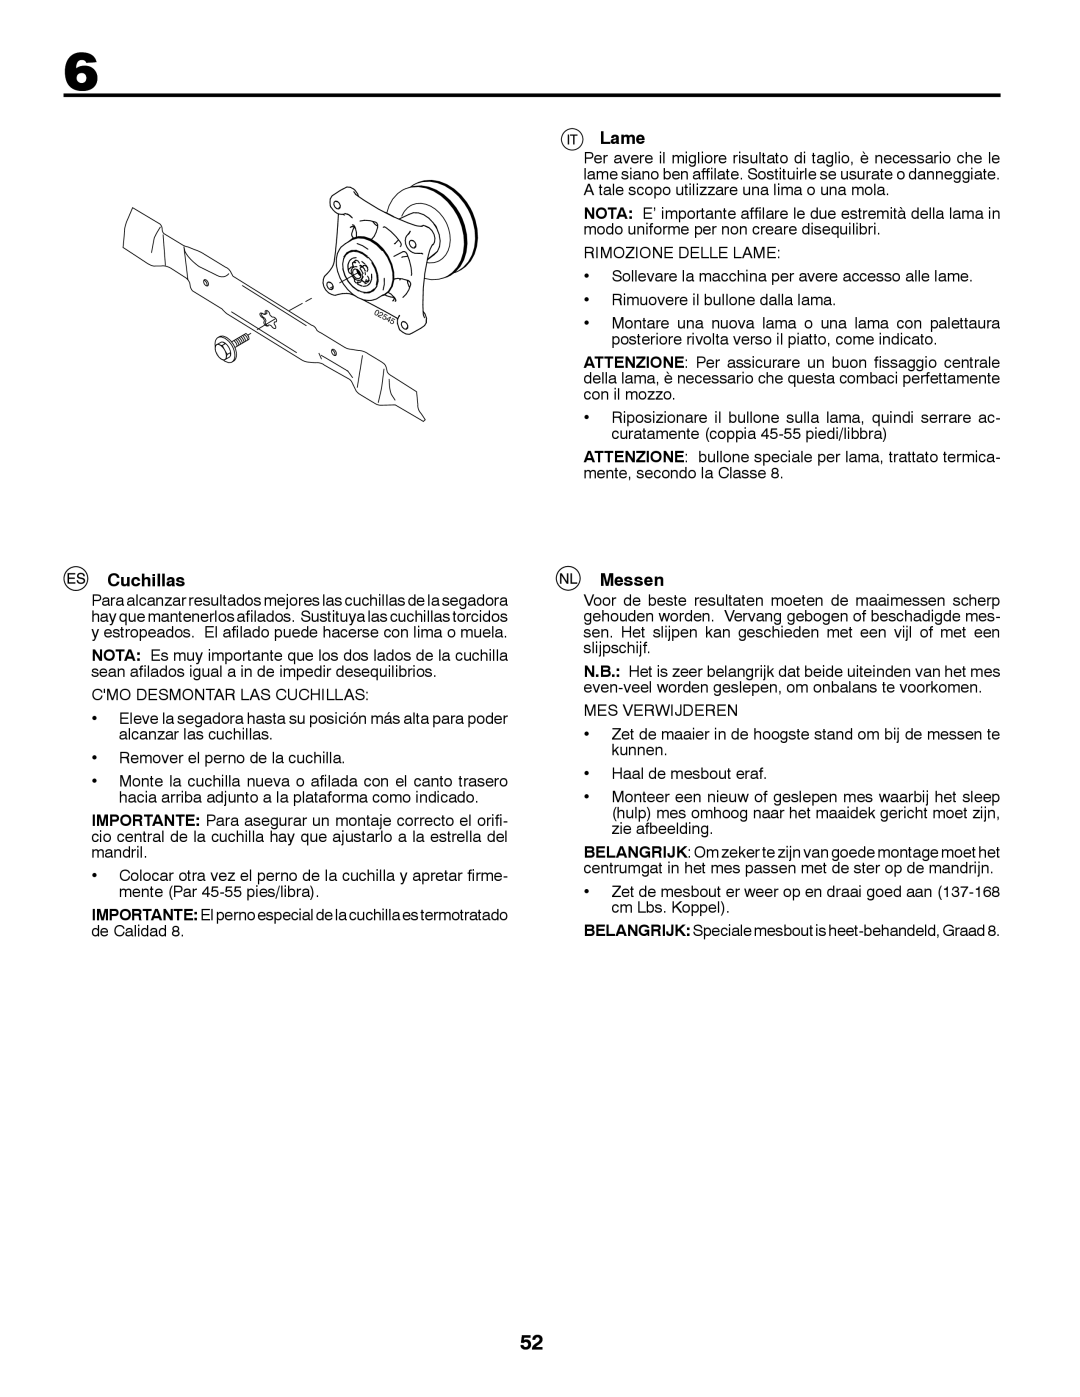 Husqvarna LT126 instruction manual Cuchillas, Lame, Messen 